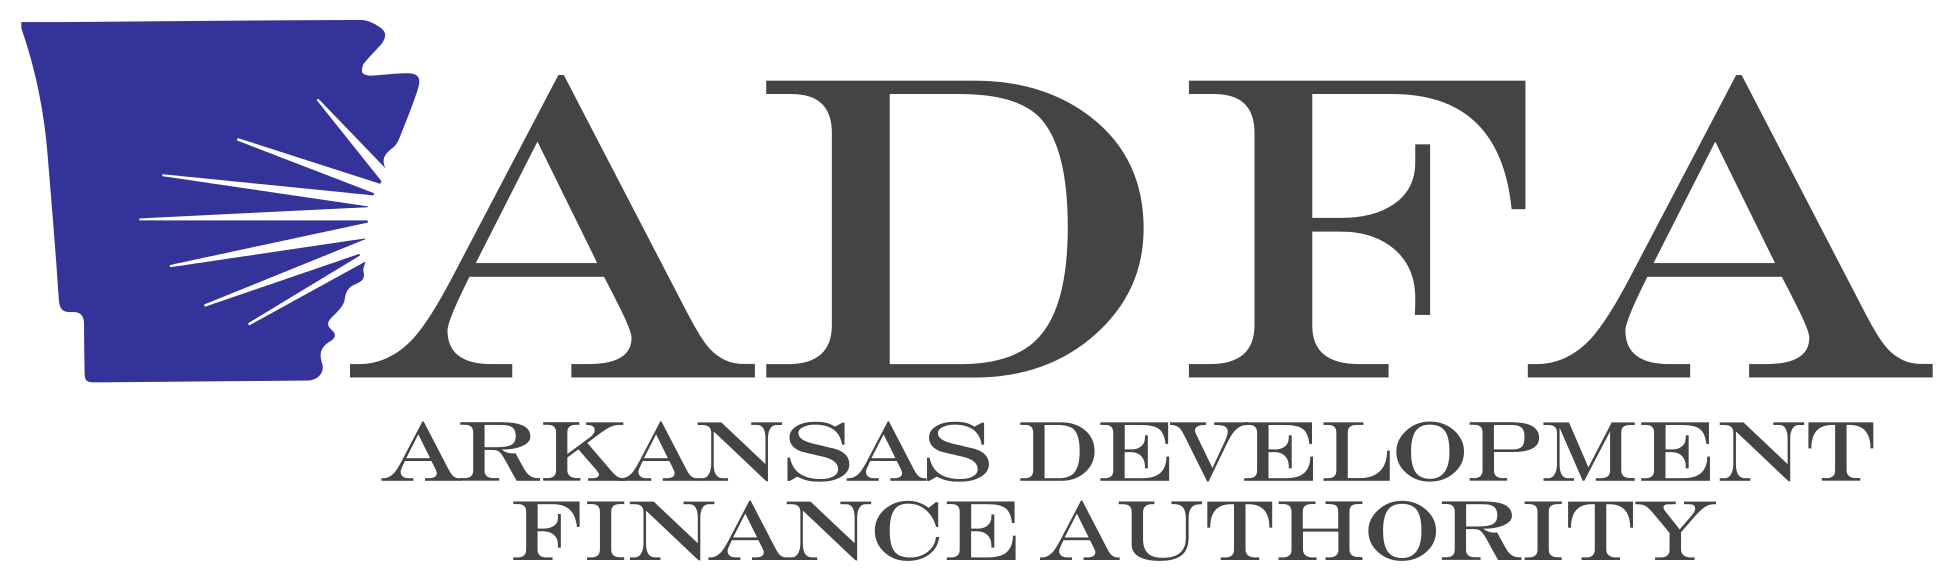 Arkansas Development Finance Authority - Official Seal or Logo